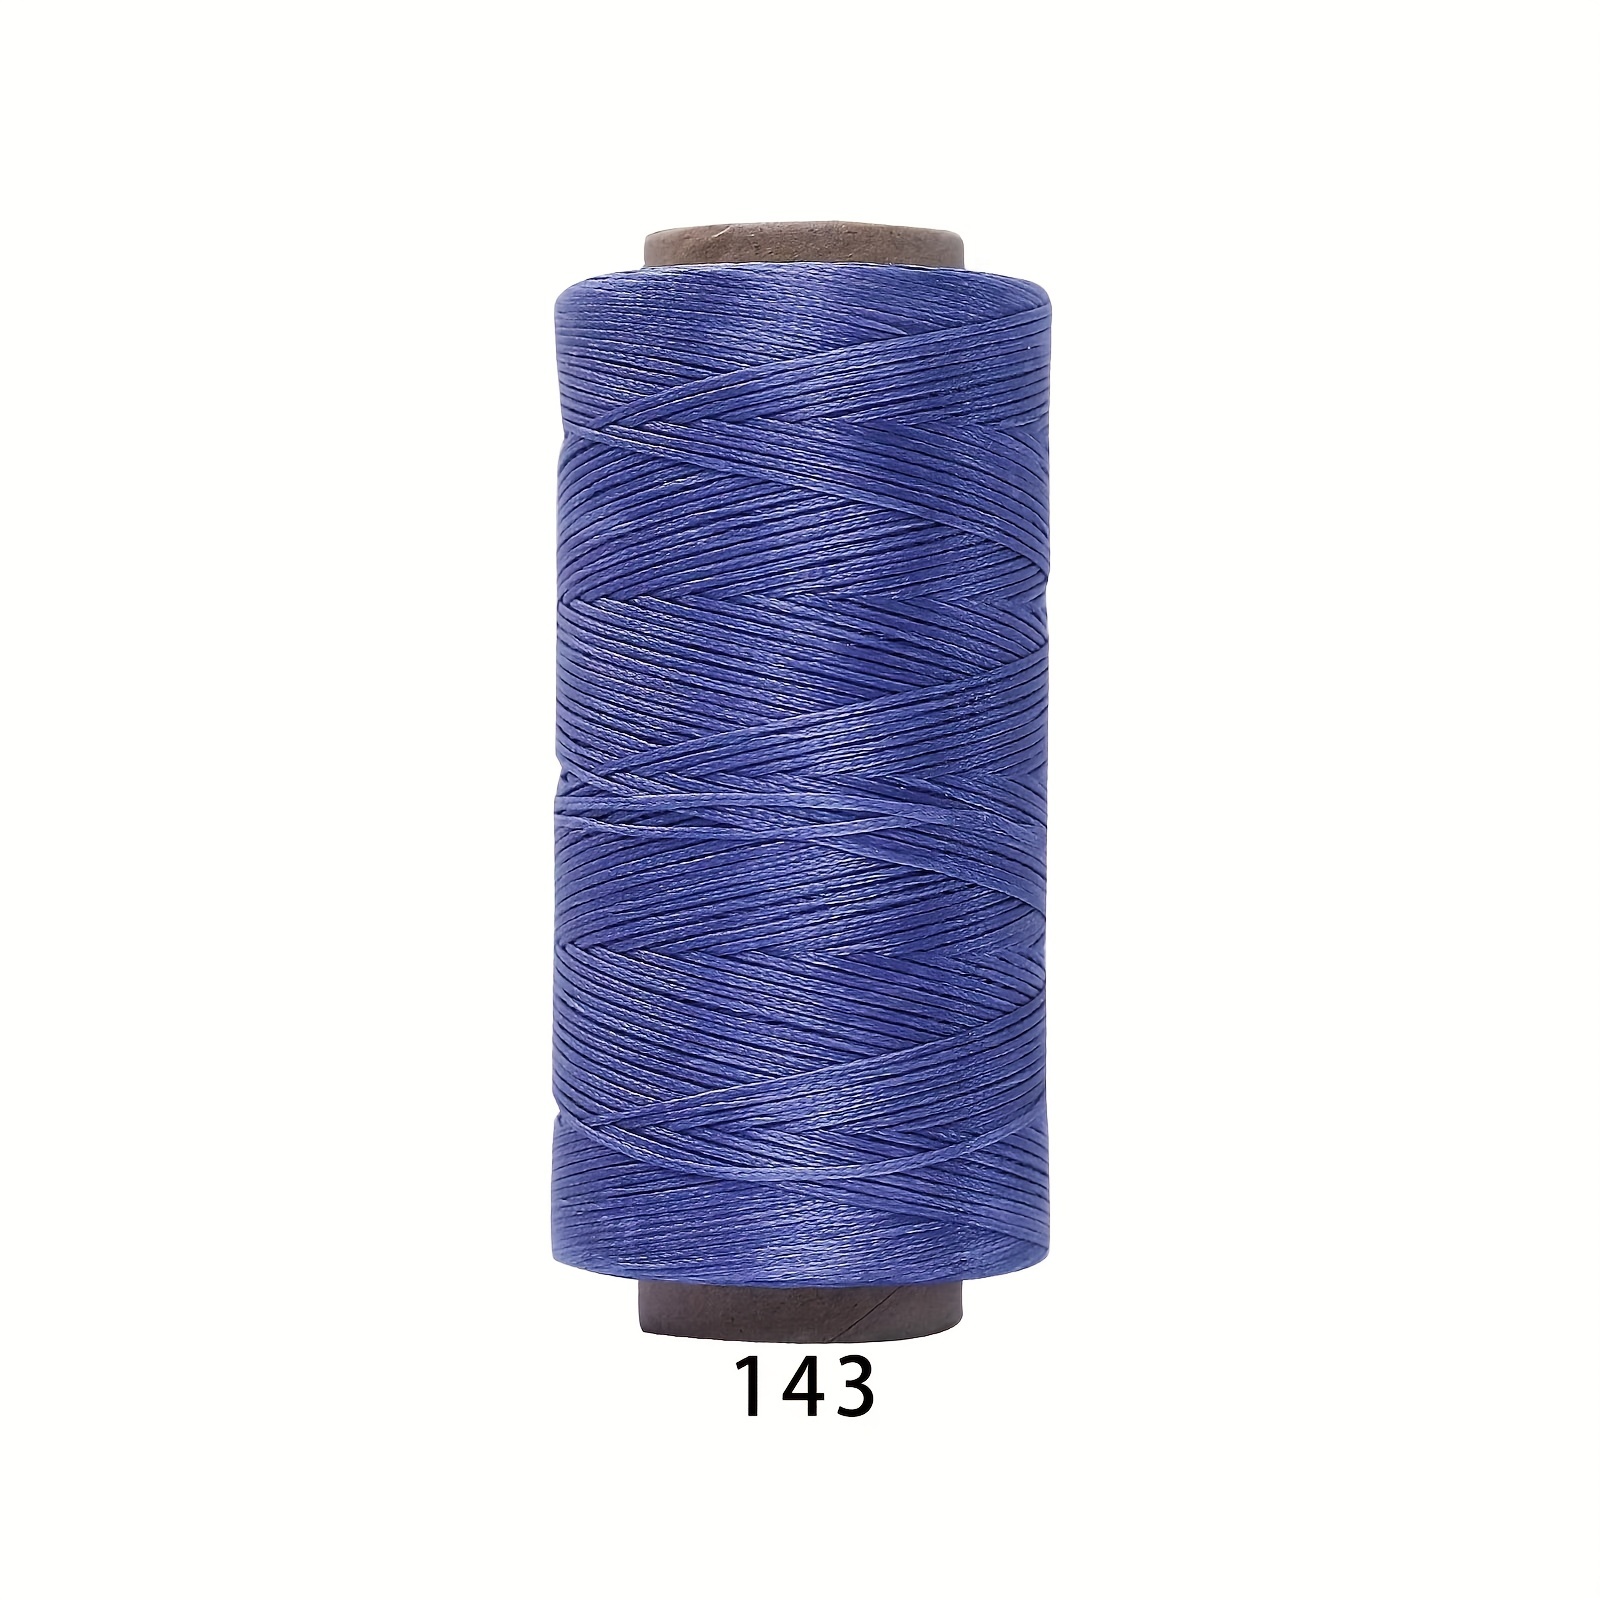 260m 150D Hand-stitched Leather Diy Flat Wax Thread Handmade